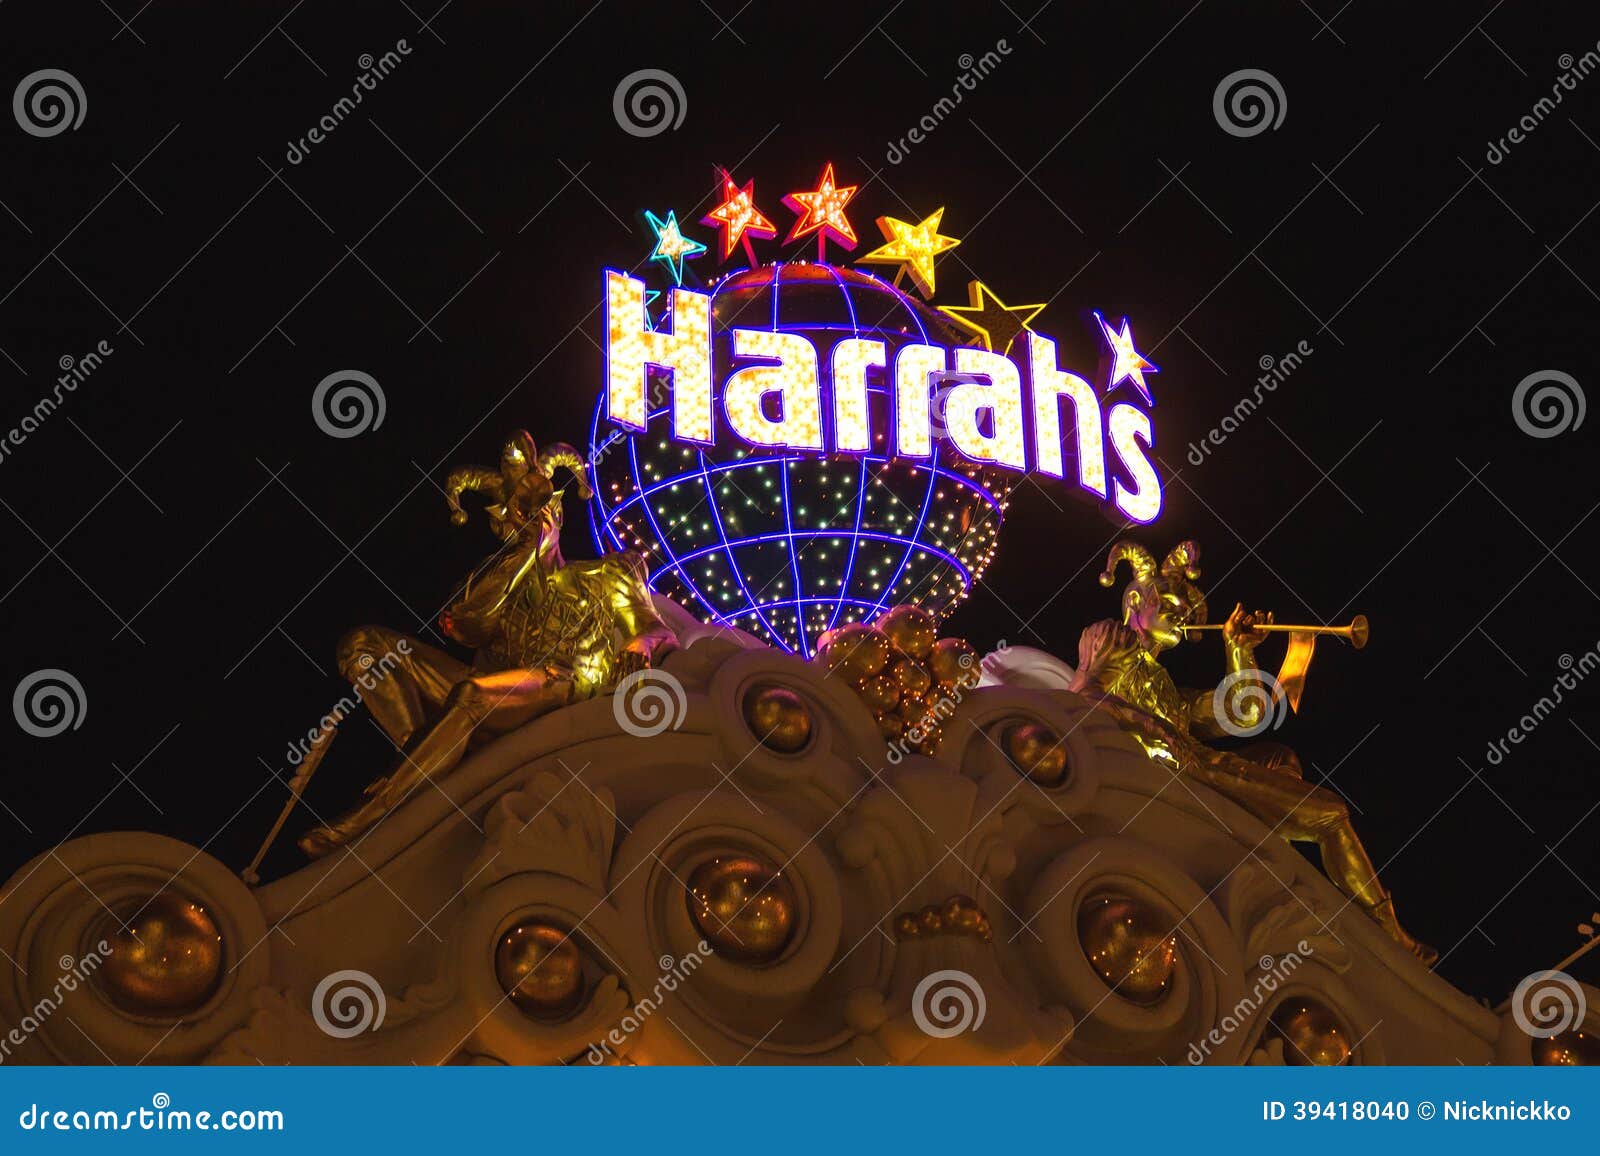 Harrah&#39;s Hotel And Casino Sign In Las Vegas Editorial Image - Image: 39418040